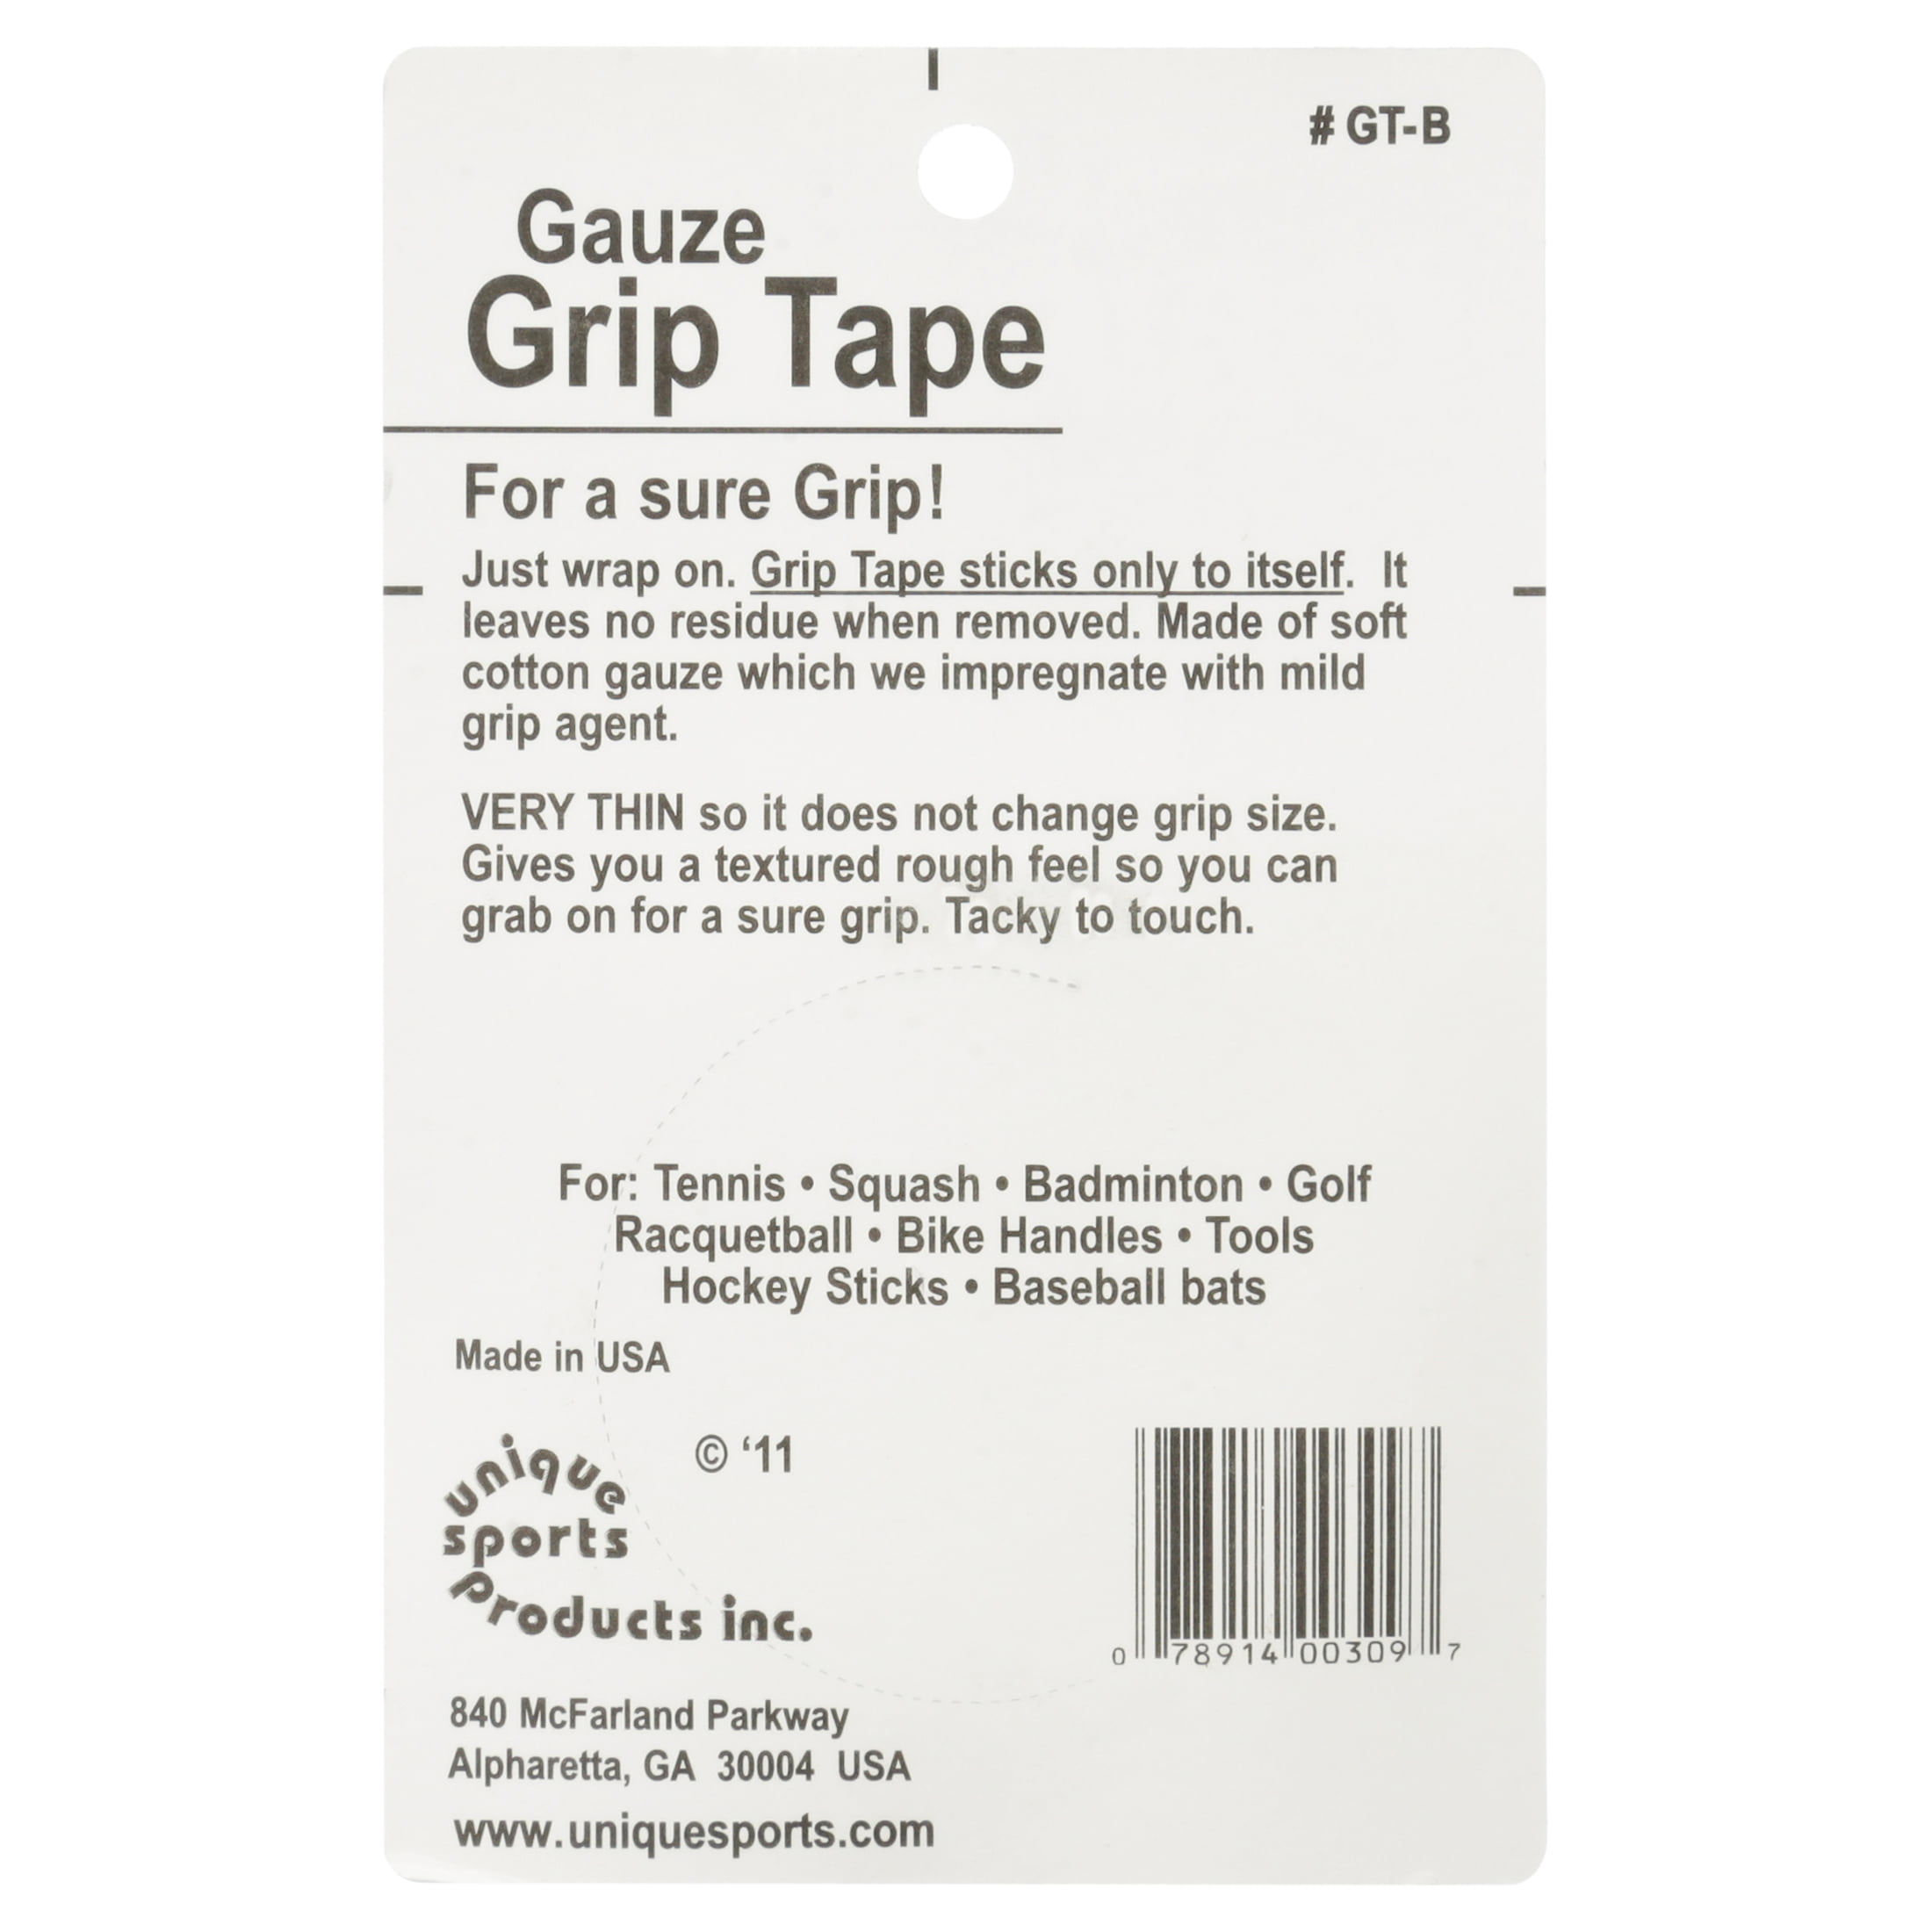 Tourna Multi-Purpose Sticky Grip Tape Unique Sports Products Inc GT-B